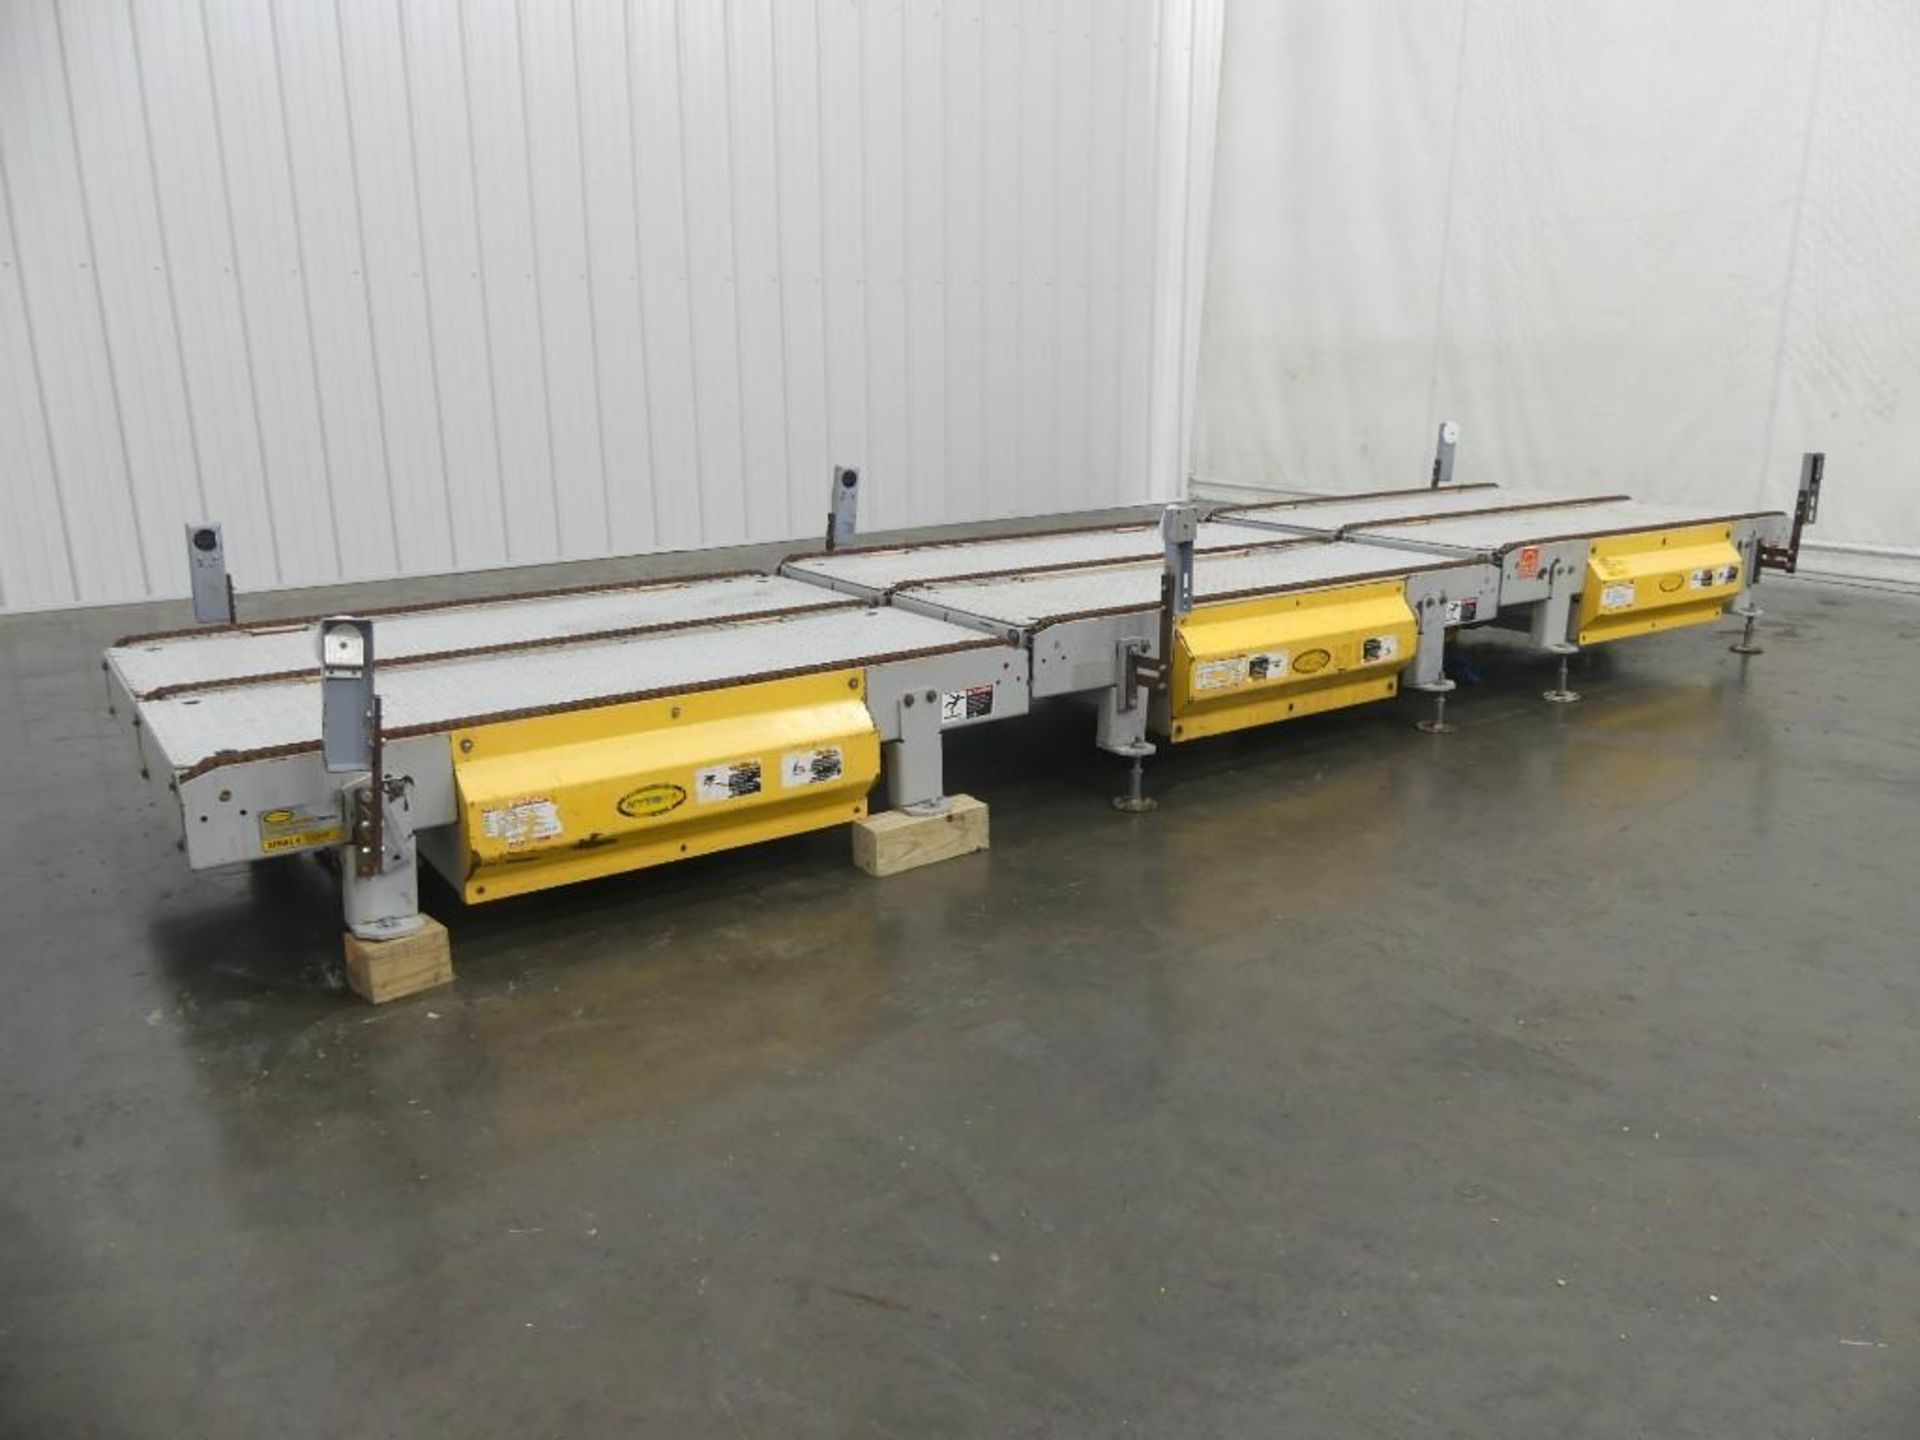 Hytrol Conveyor Pallet Scale System 180" L x 43" W - Image 4 of 20